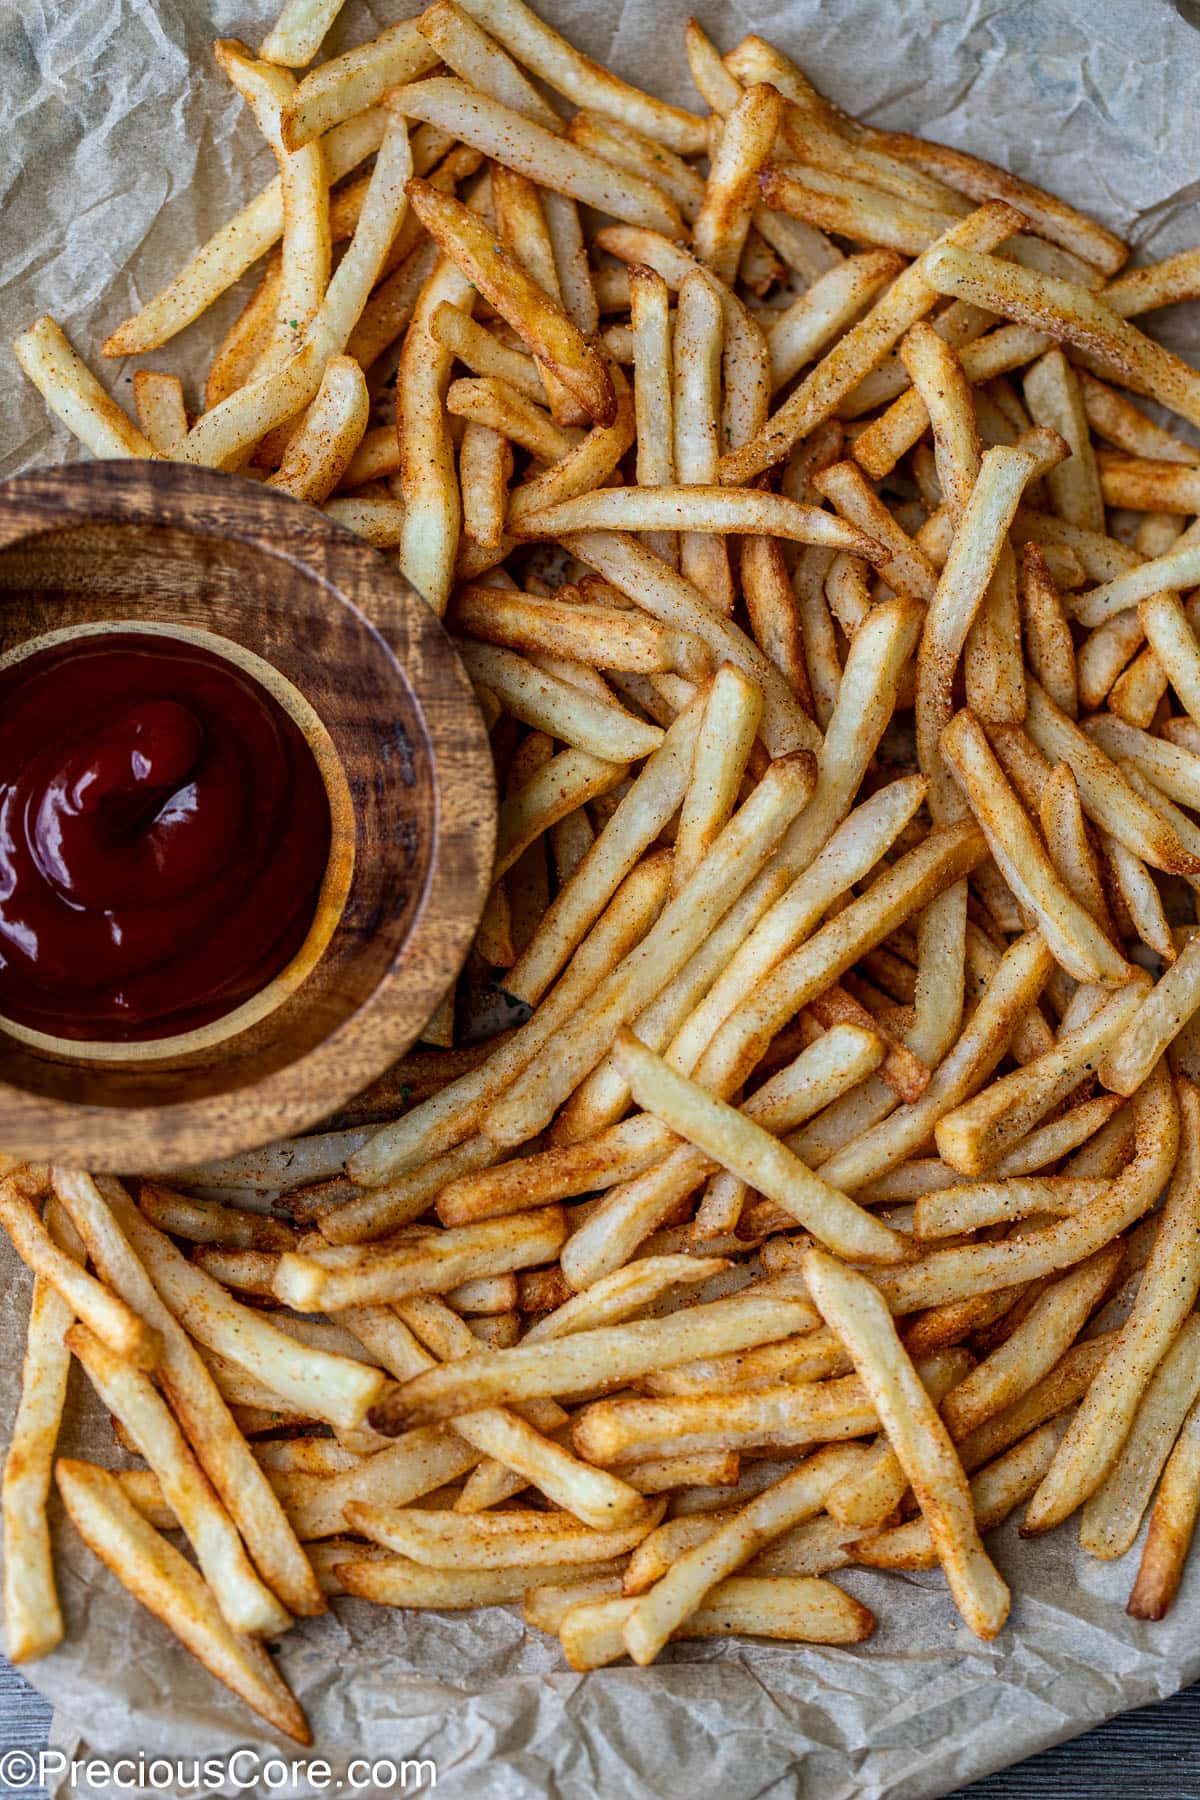 Close-up of fries and ketchup.